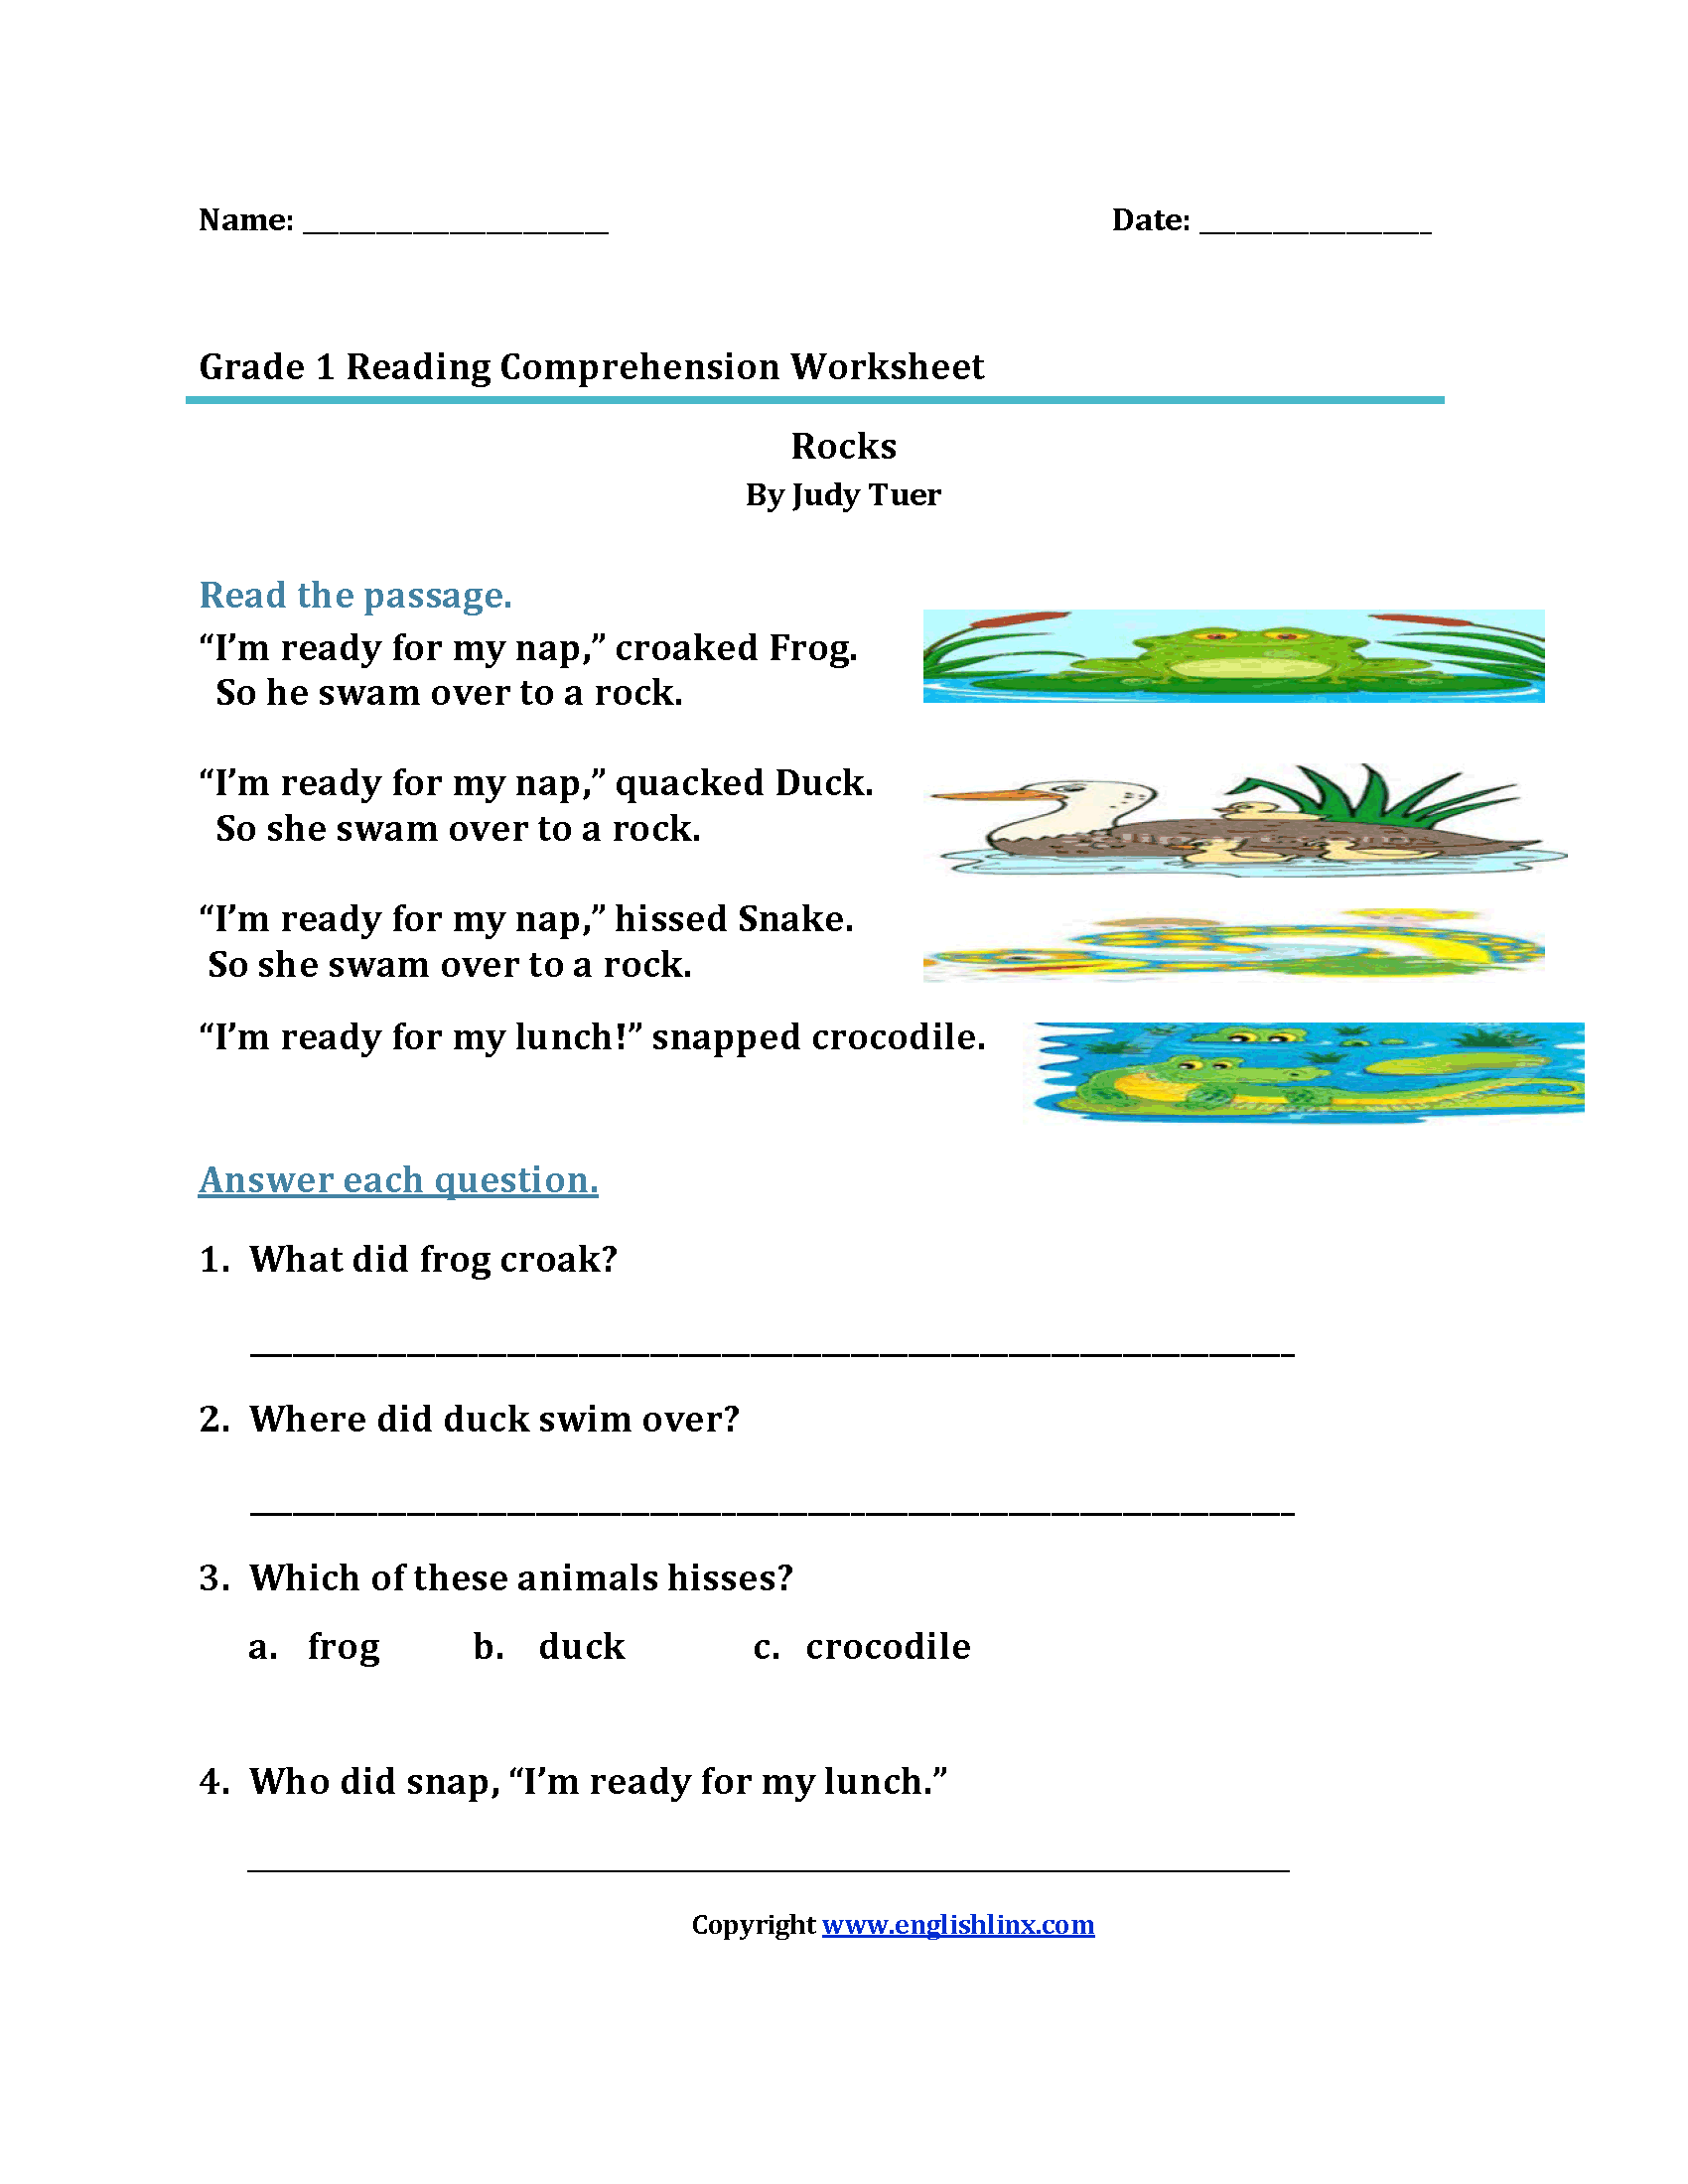 Rocks First Grade Reading Worksheets